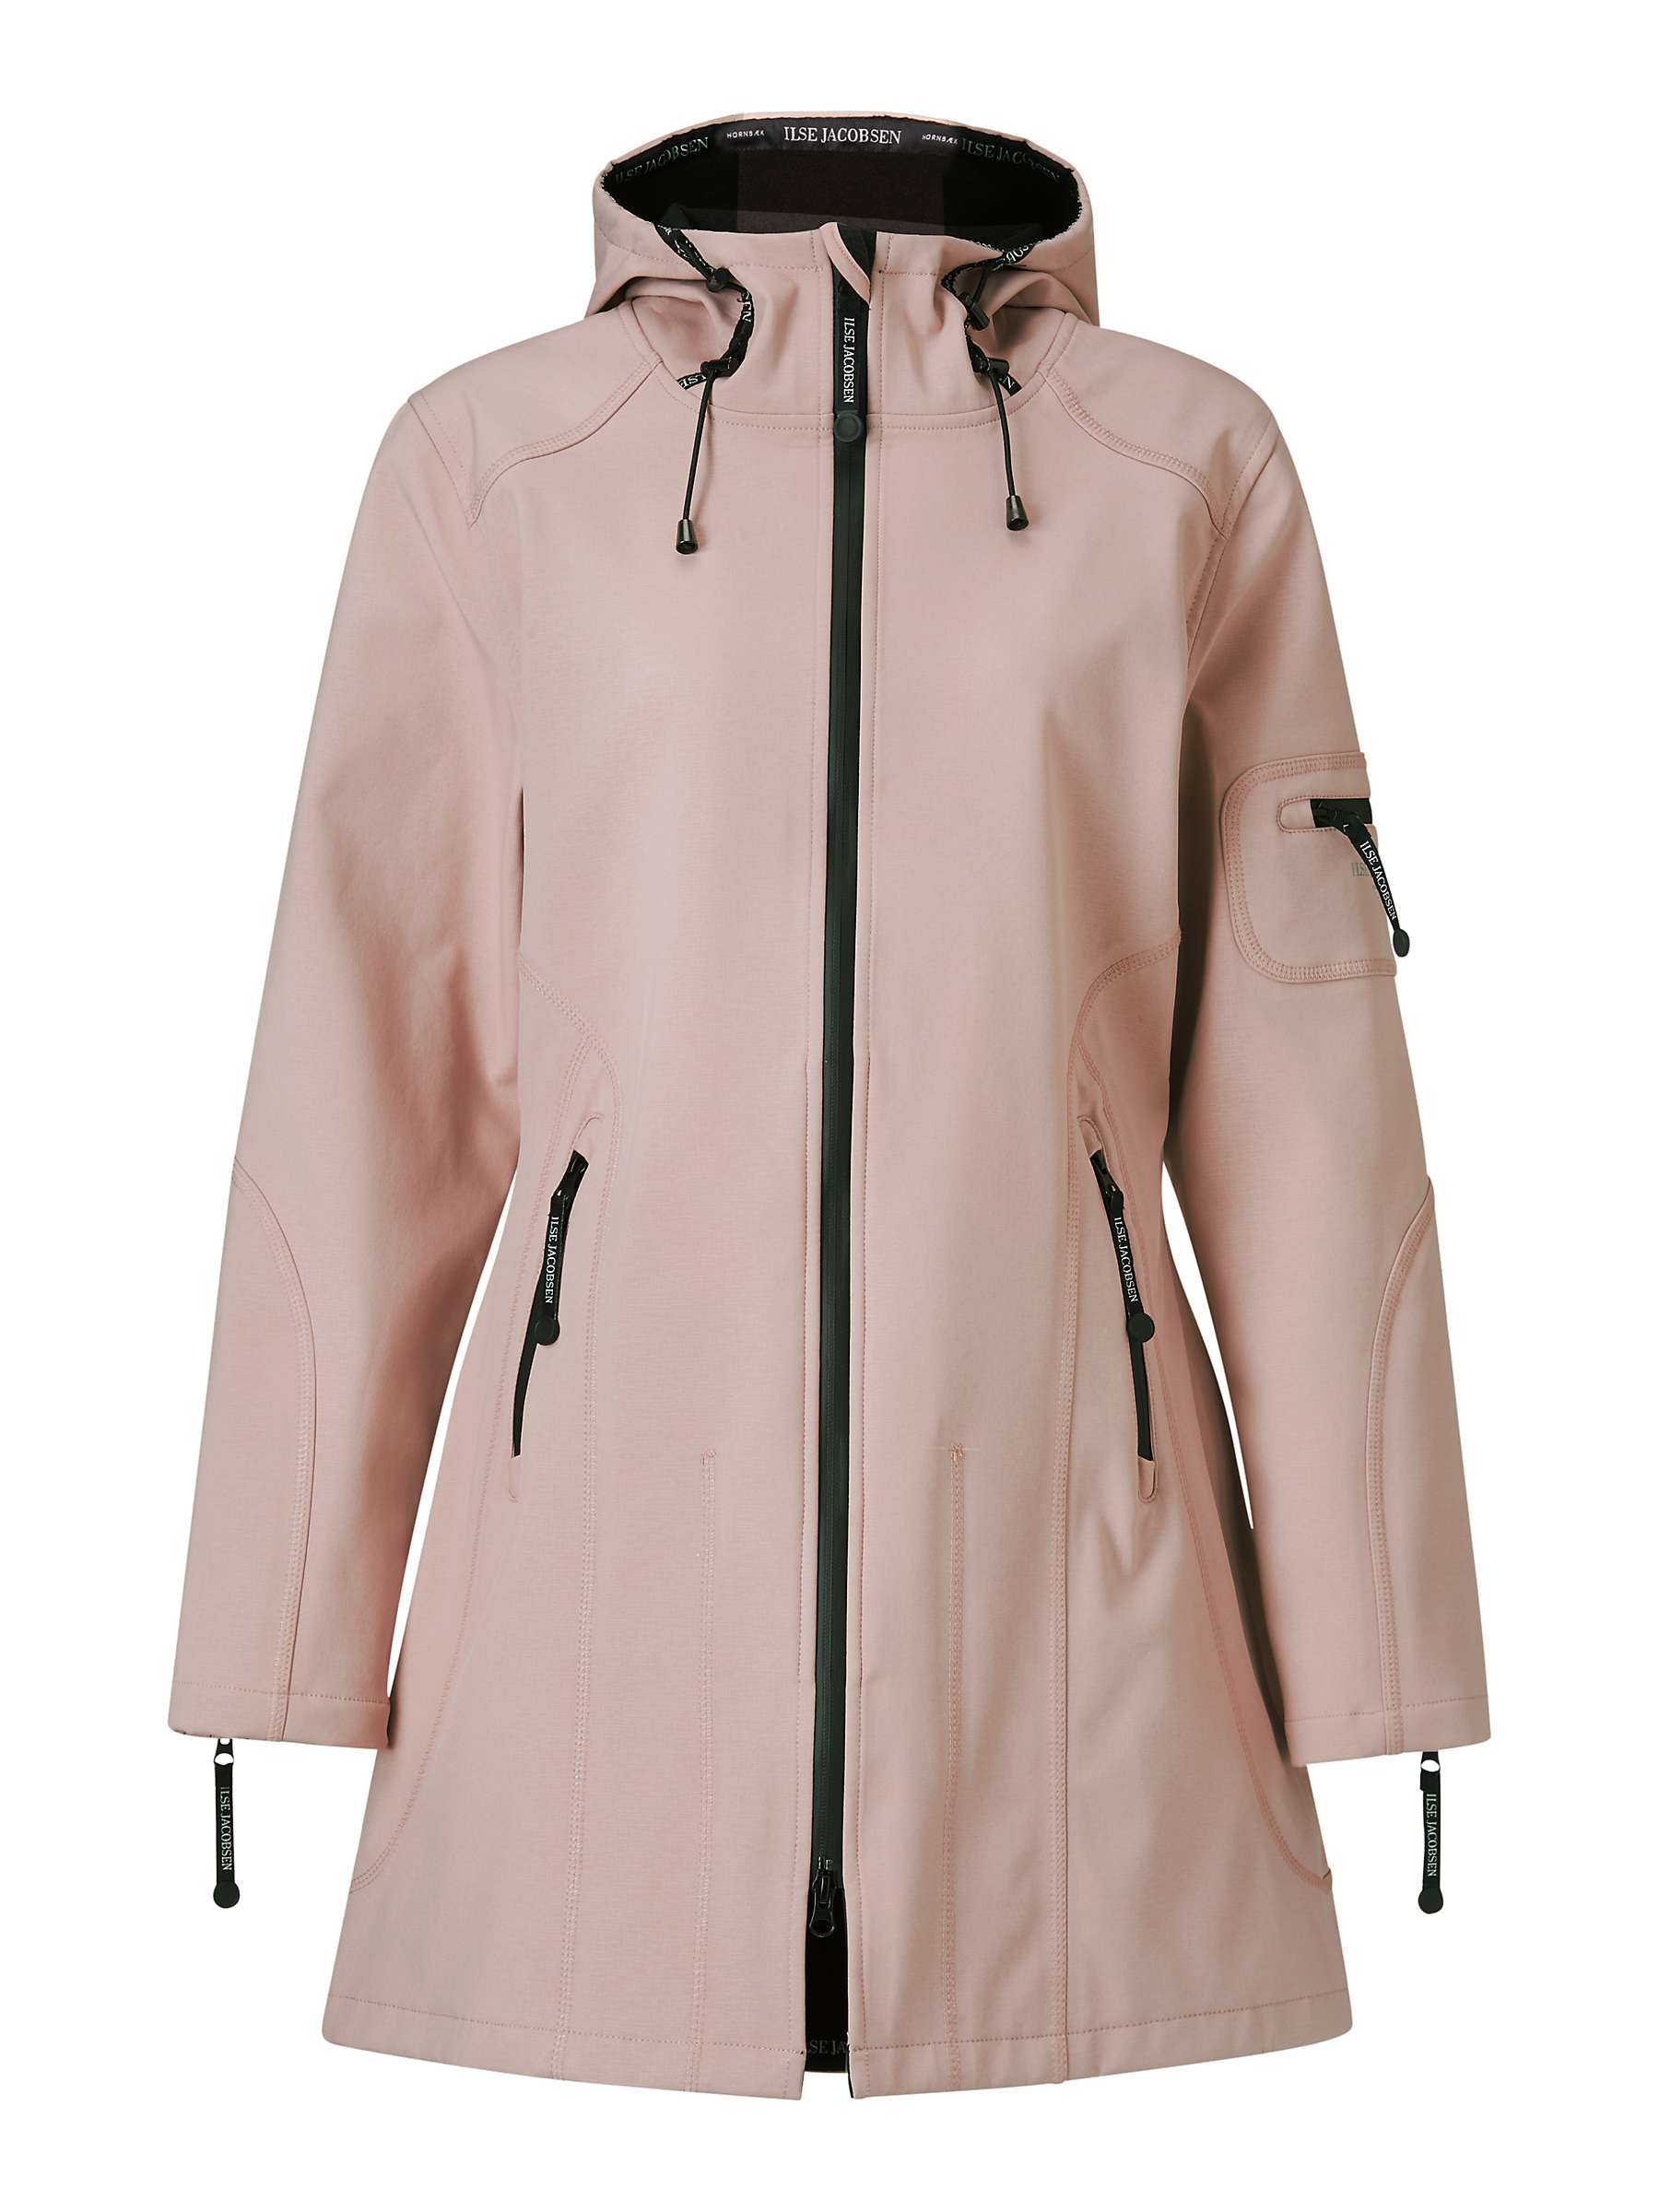 Buy Ilse Jacobsen Hornbæk 3/4 Length Raincoat, Adobe Rose Online at johnlewis.com